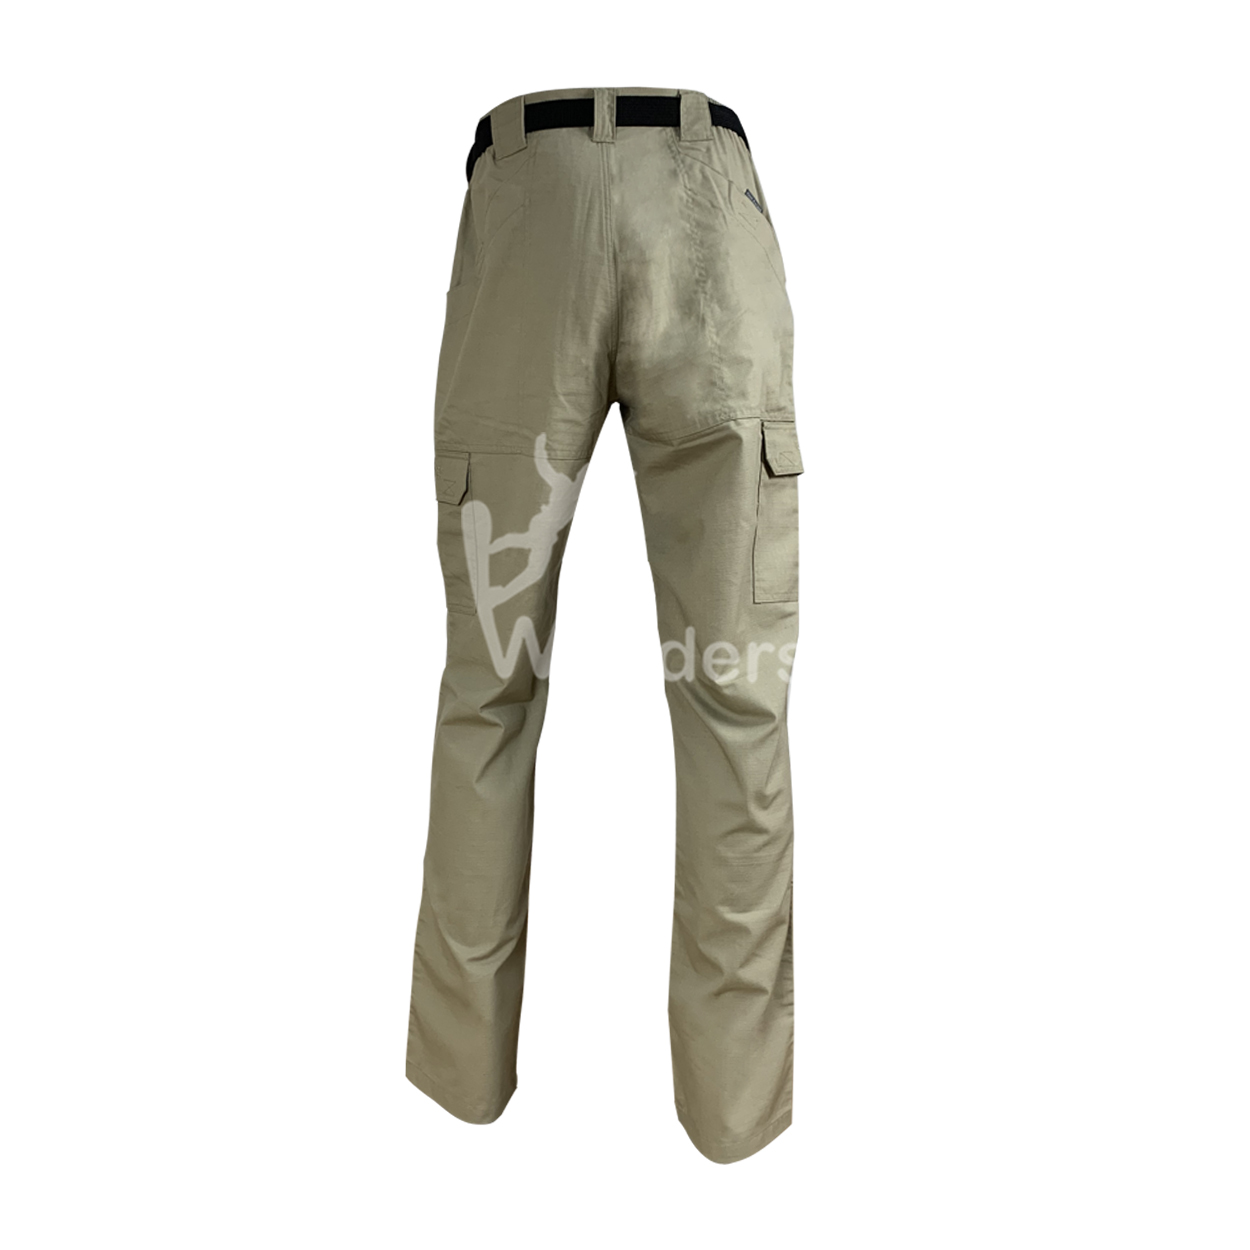 durable lightweight hiking shorts best supplier bulk production-1